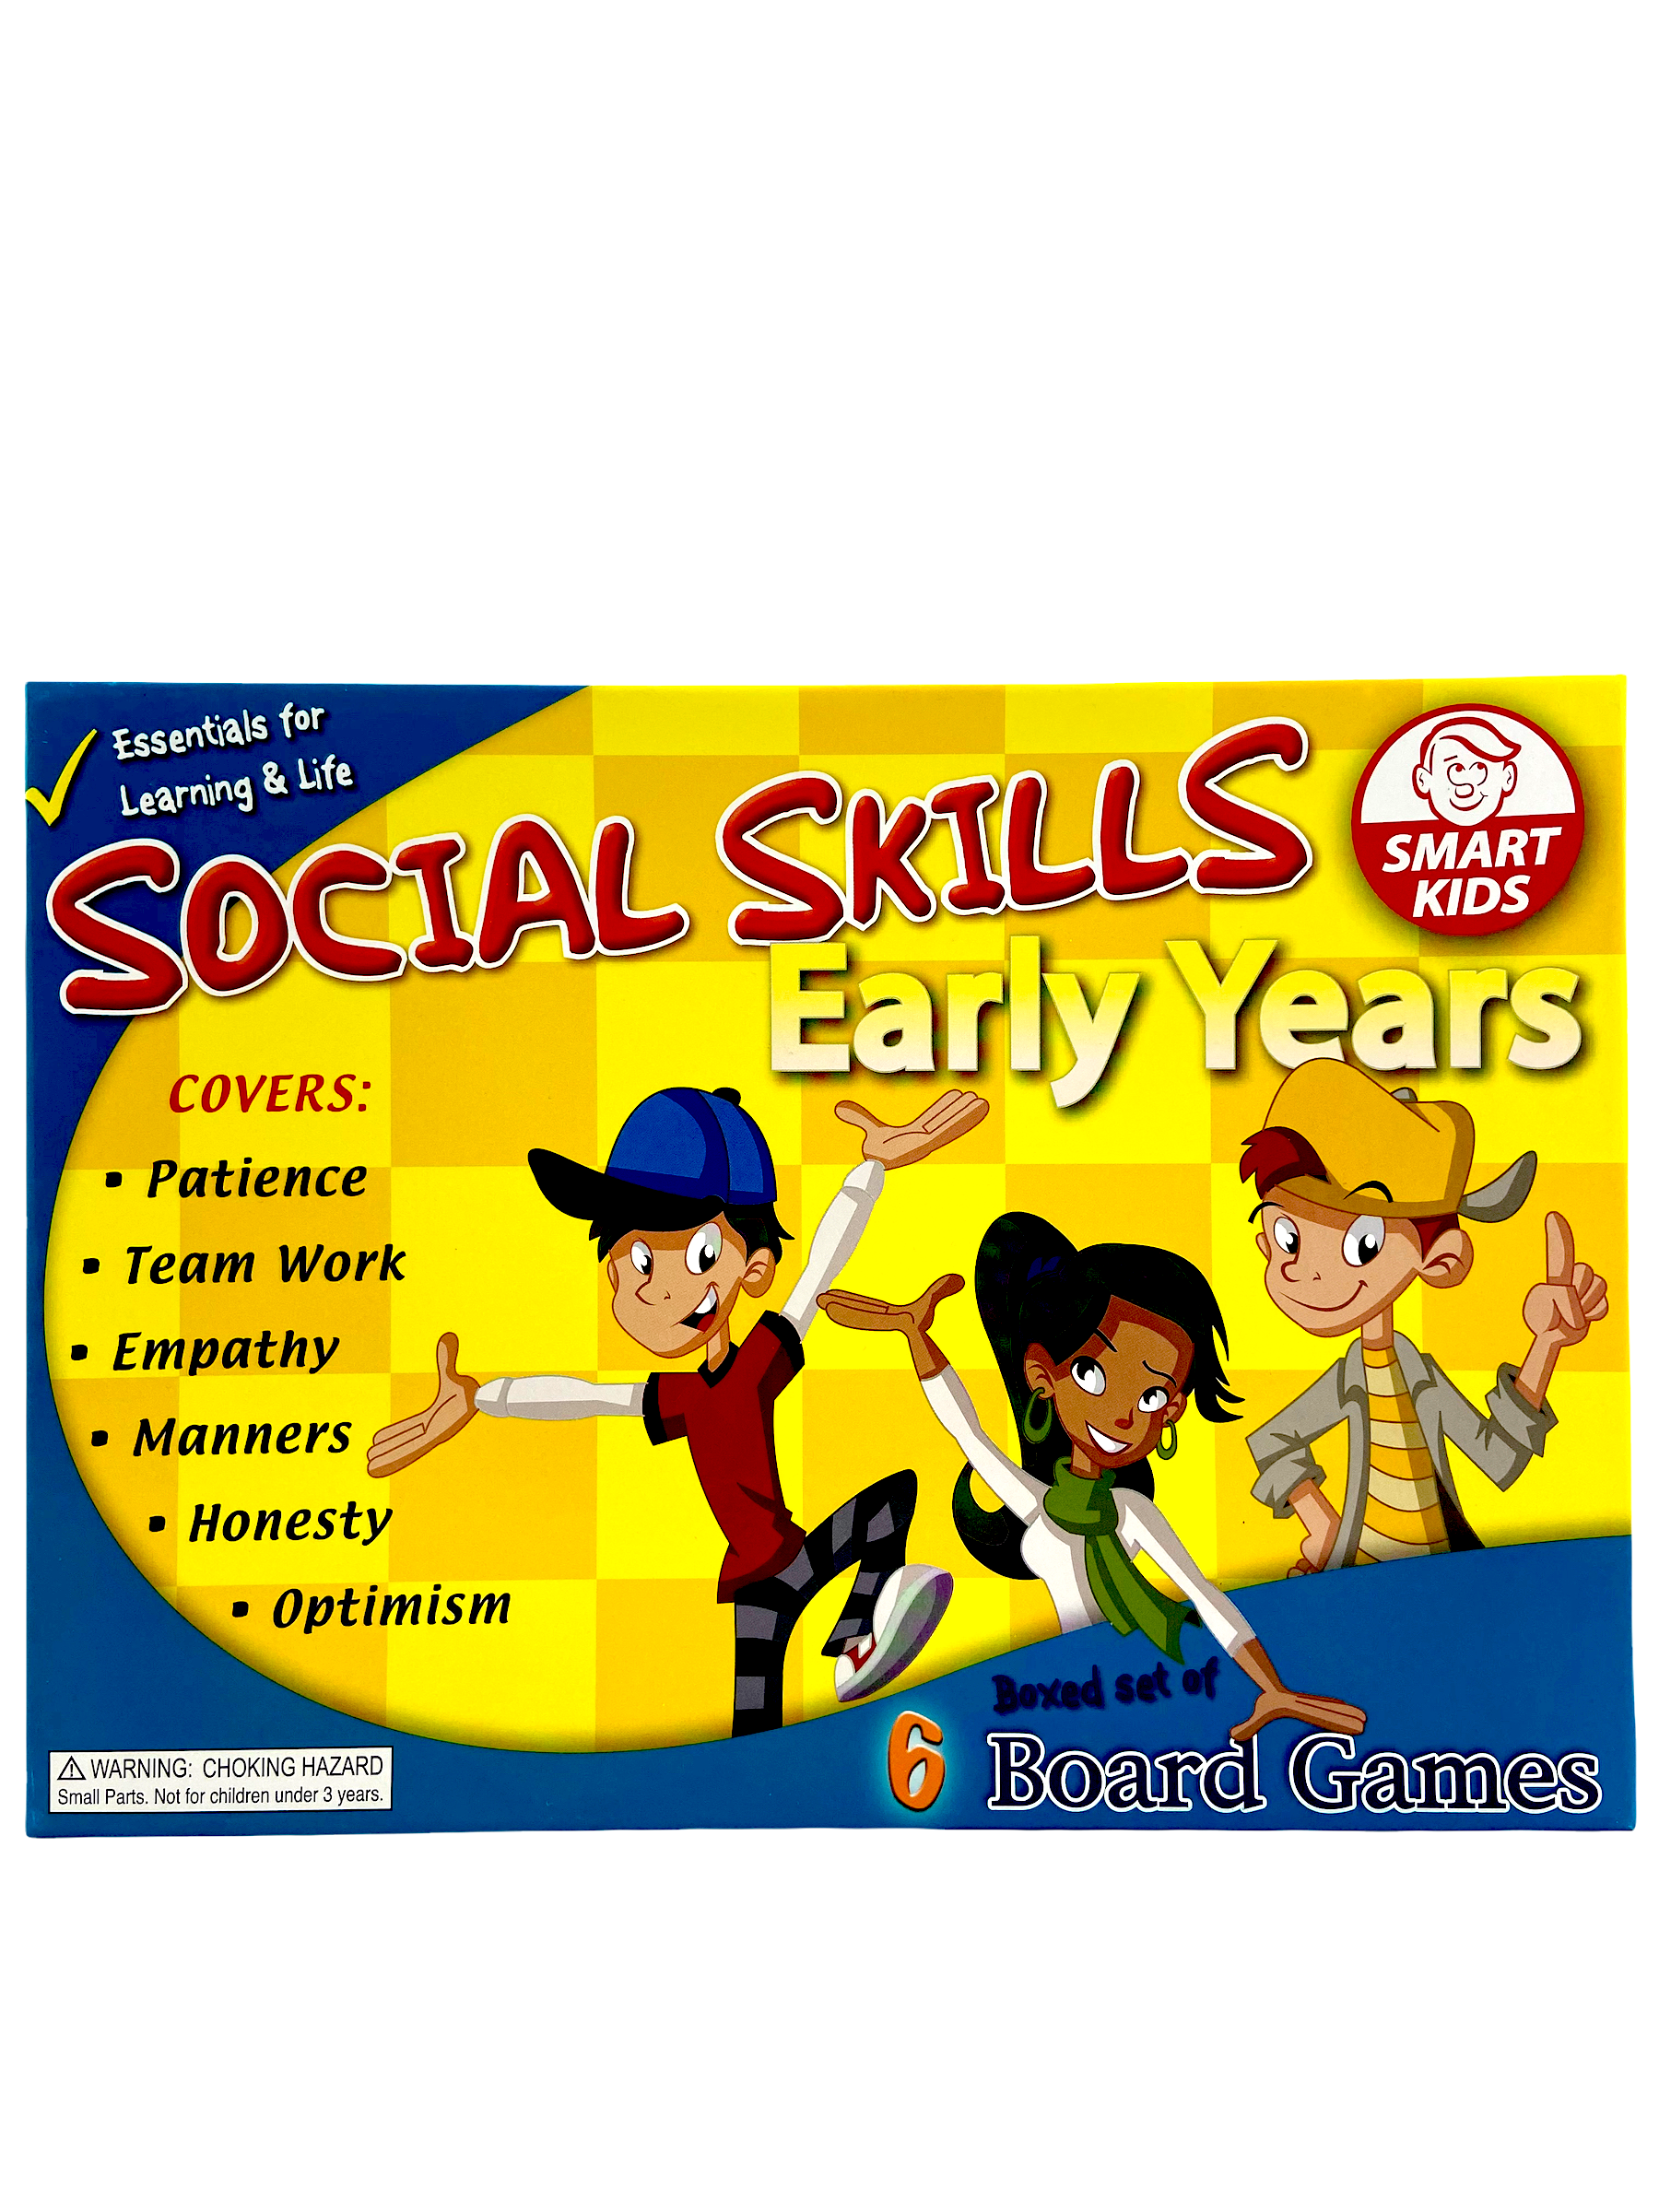 Smart Kids Social Skills Early Years packaging box showing teenagers celebrating 